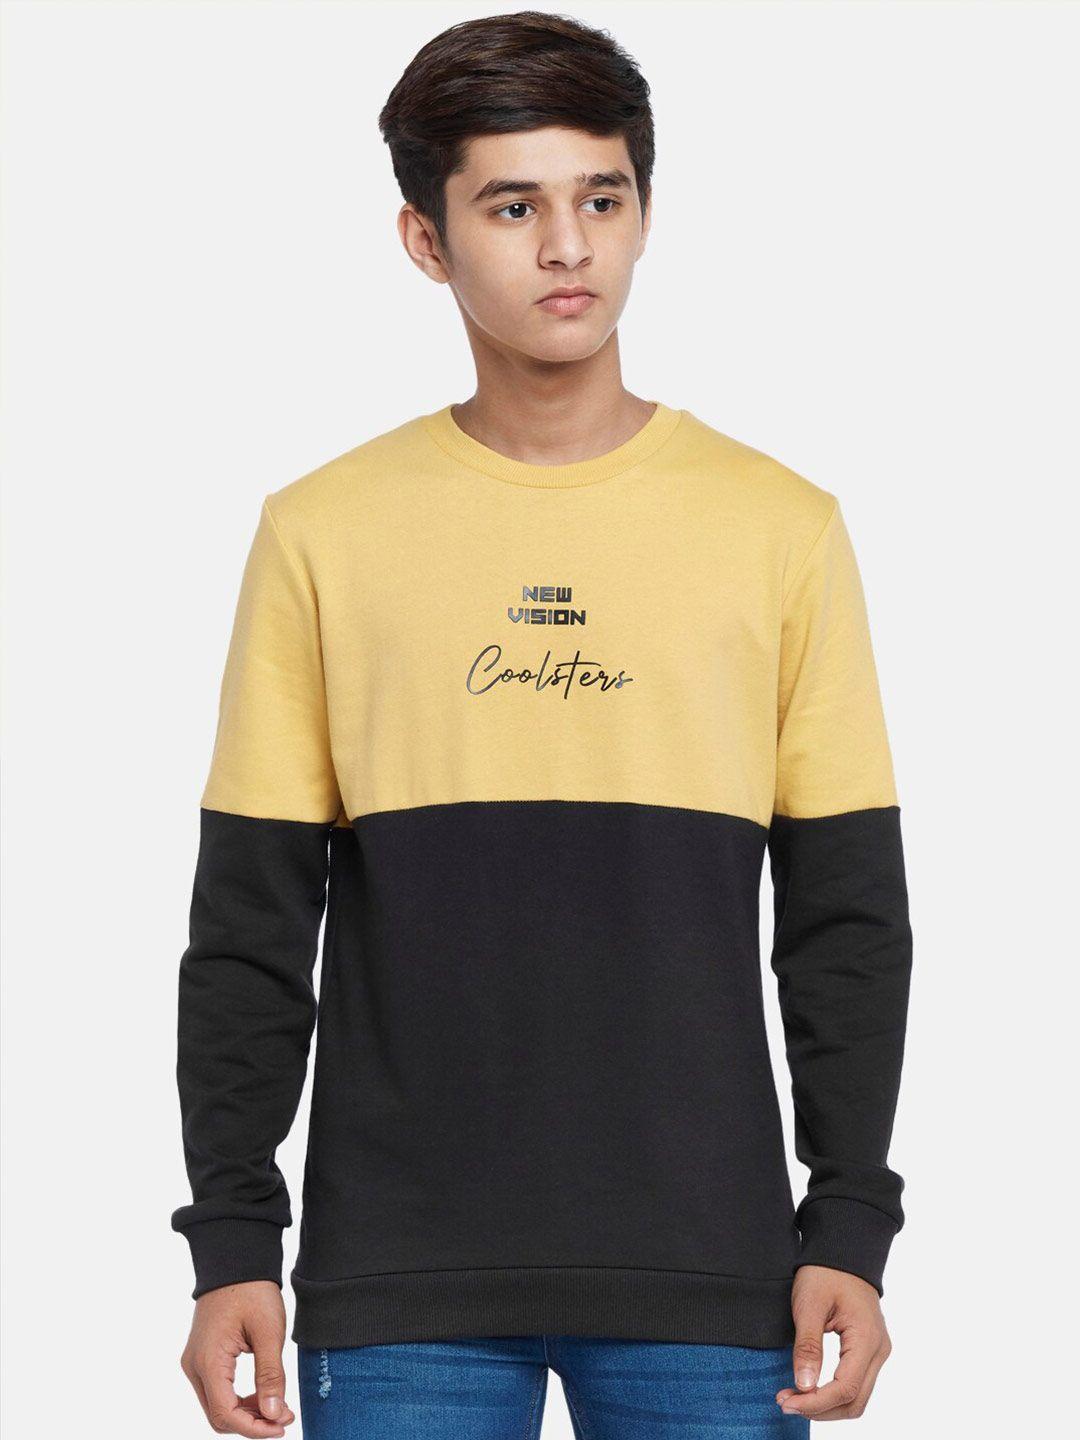 coolsters by pantaloons boys yellow colourblocked cotton sweatshirt